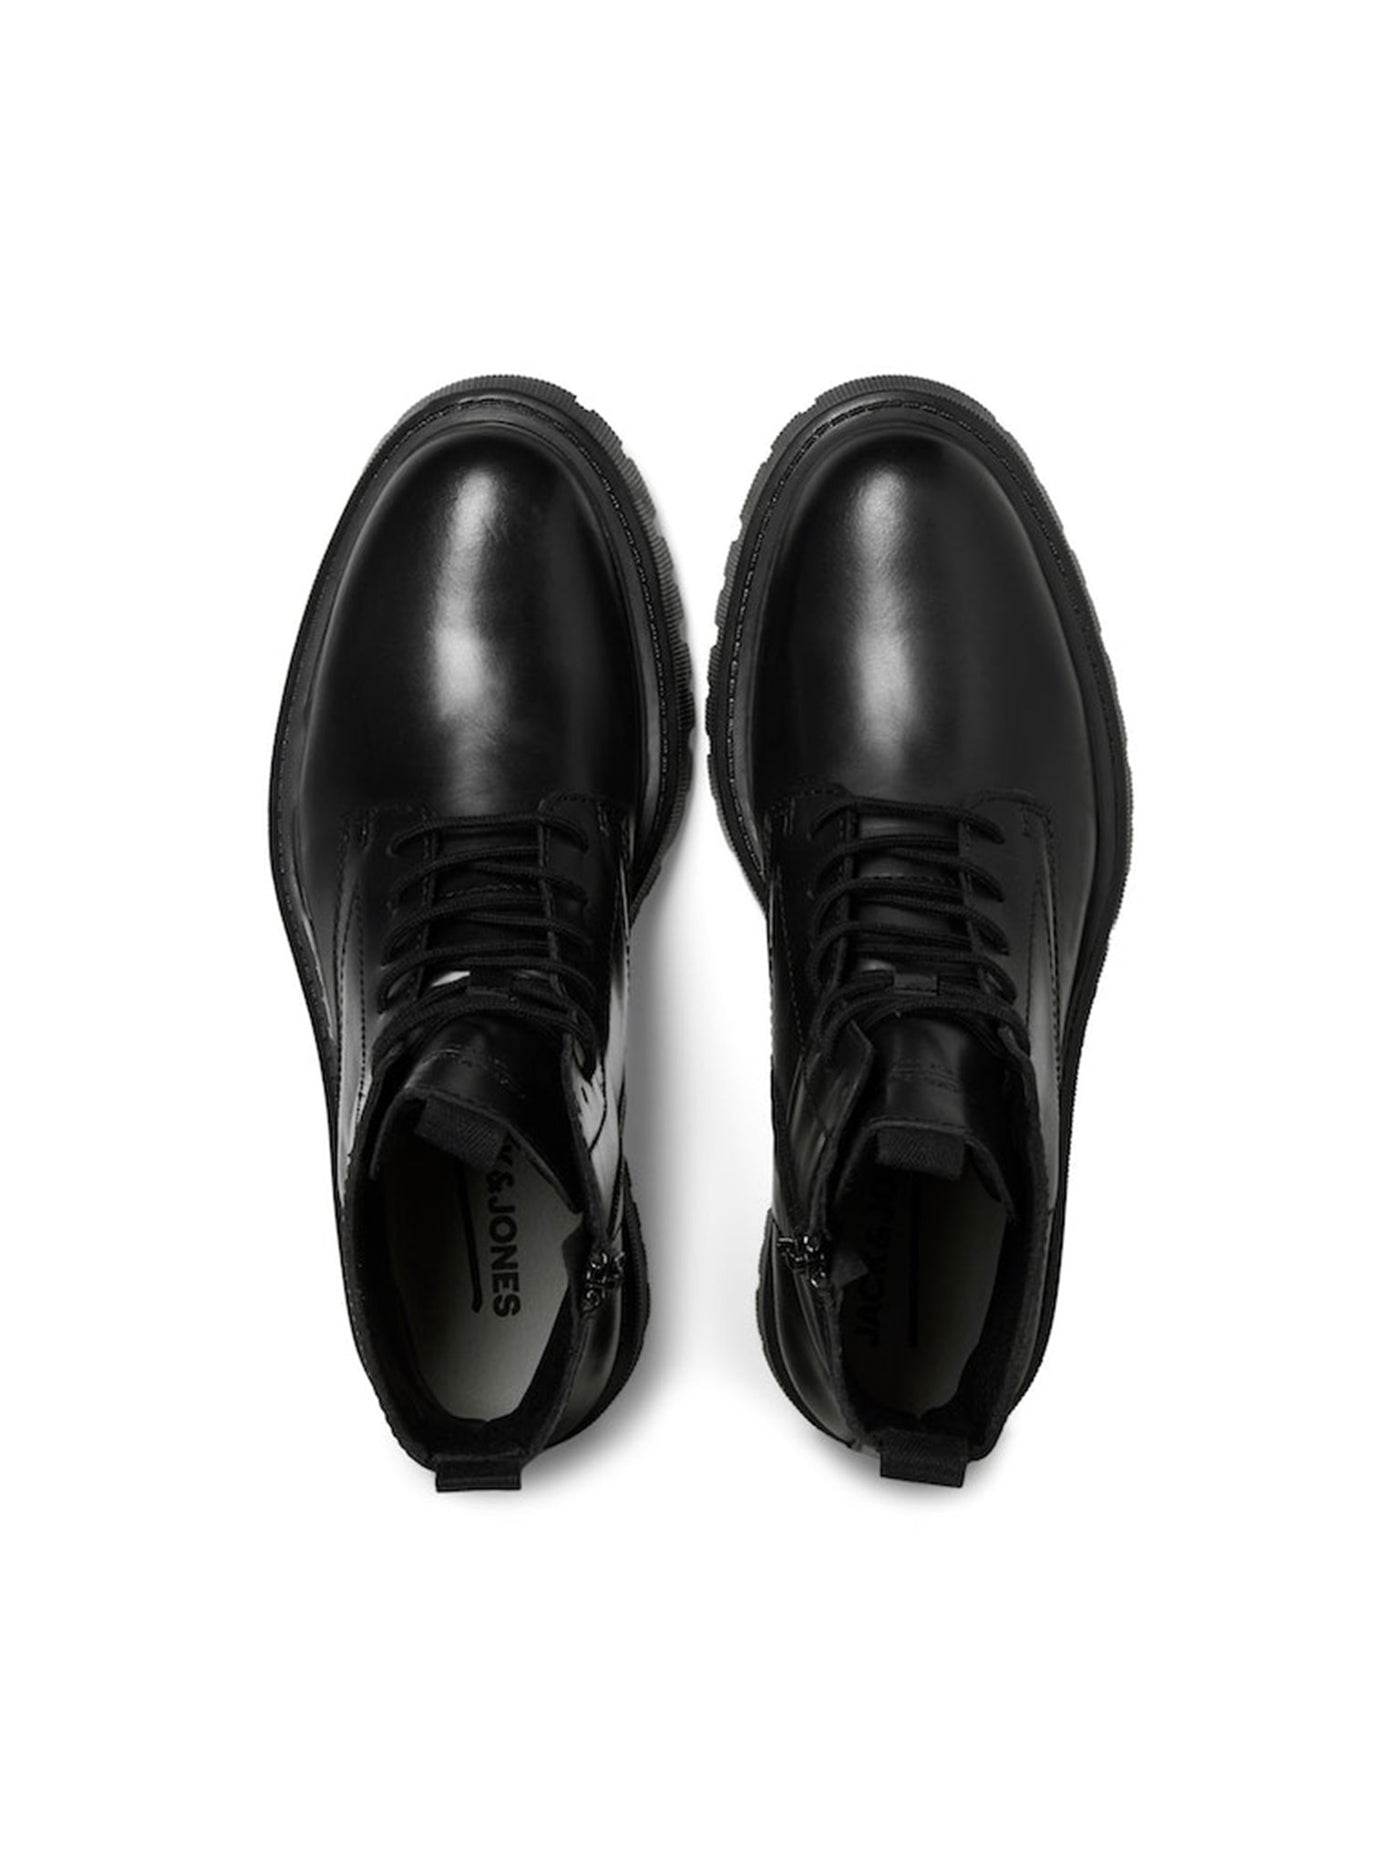 Dixon Leather Boots - Anthracite - Jack & Jones - Sort 5